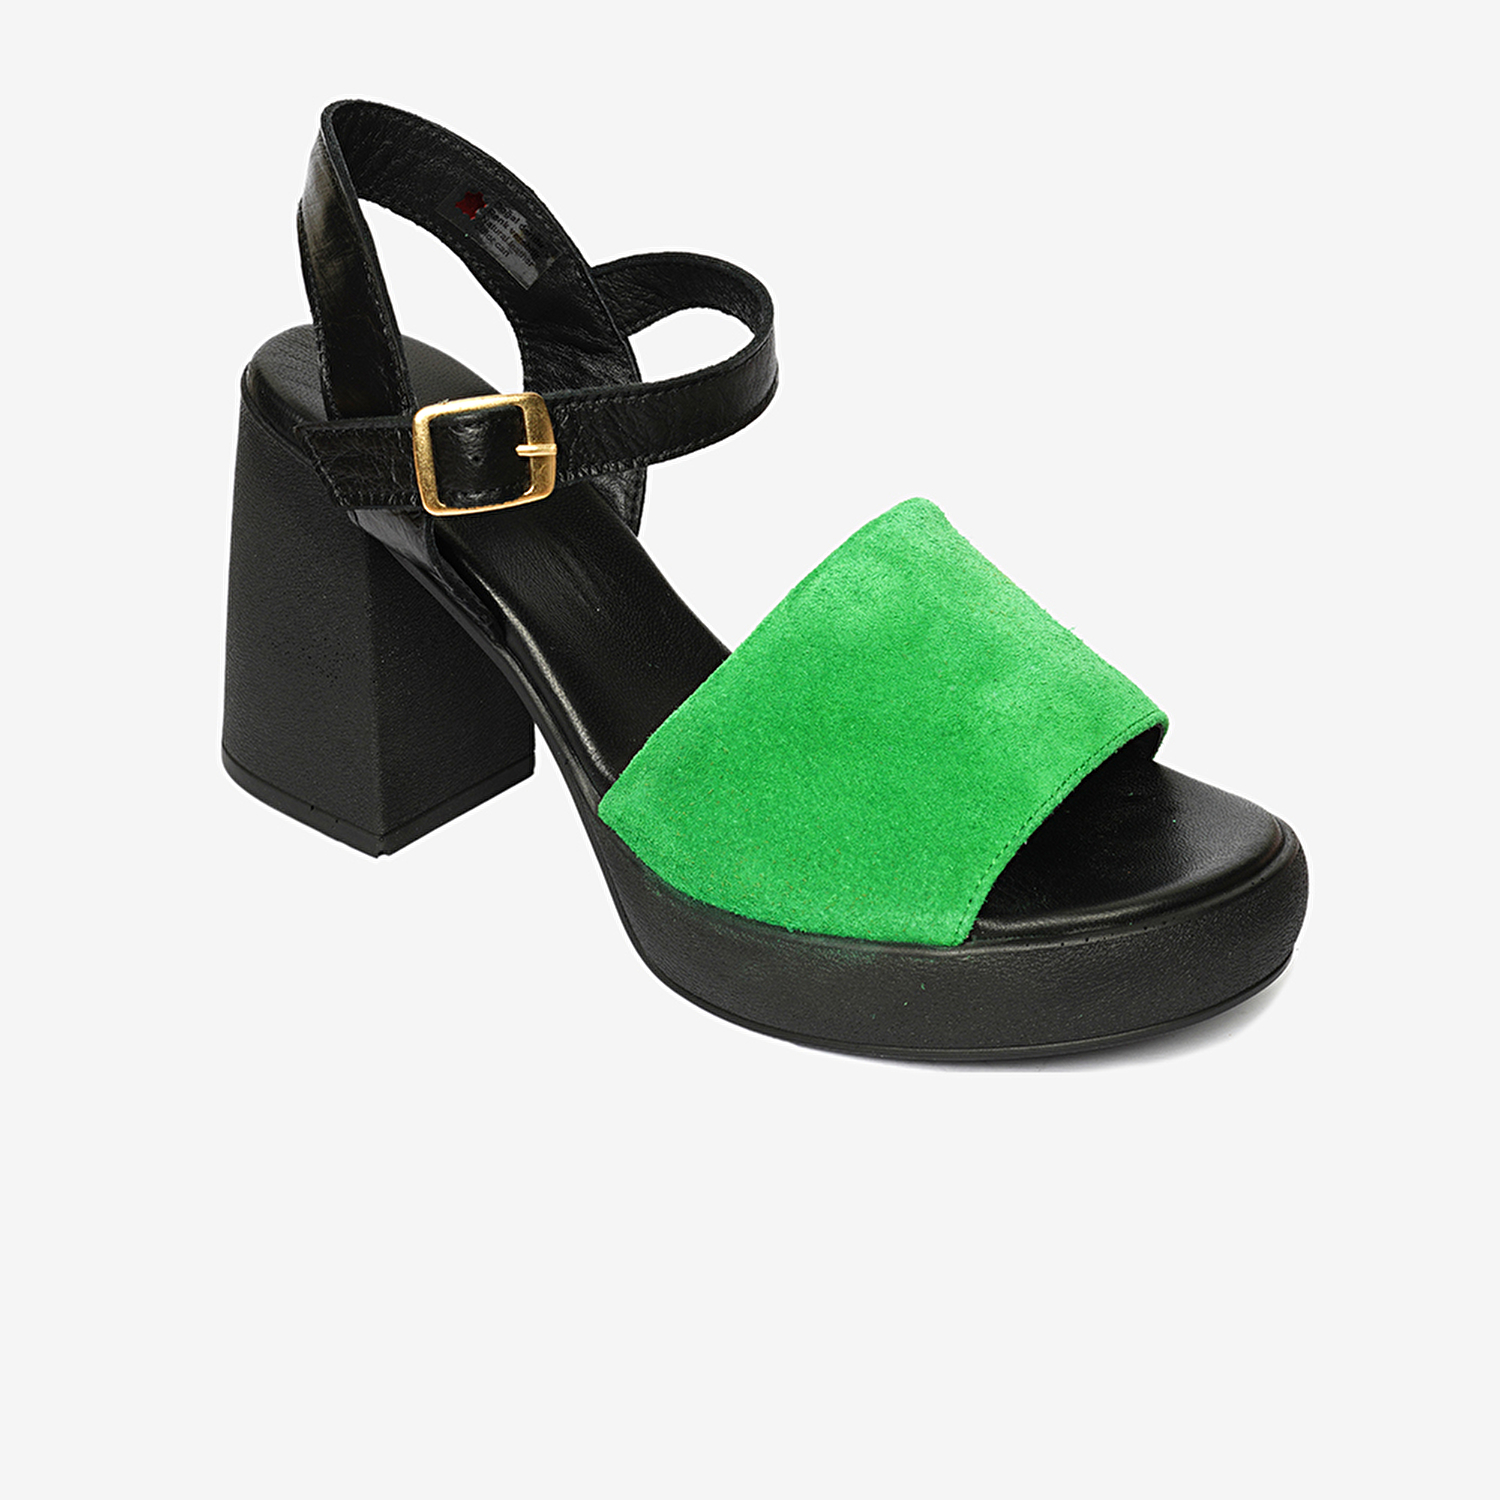 Kadın Siyah Yeşil Hakiki Deri Sandalet 4Y2TS59010-1